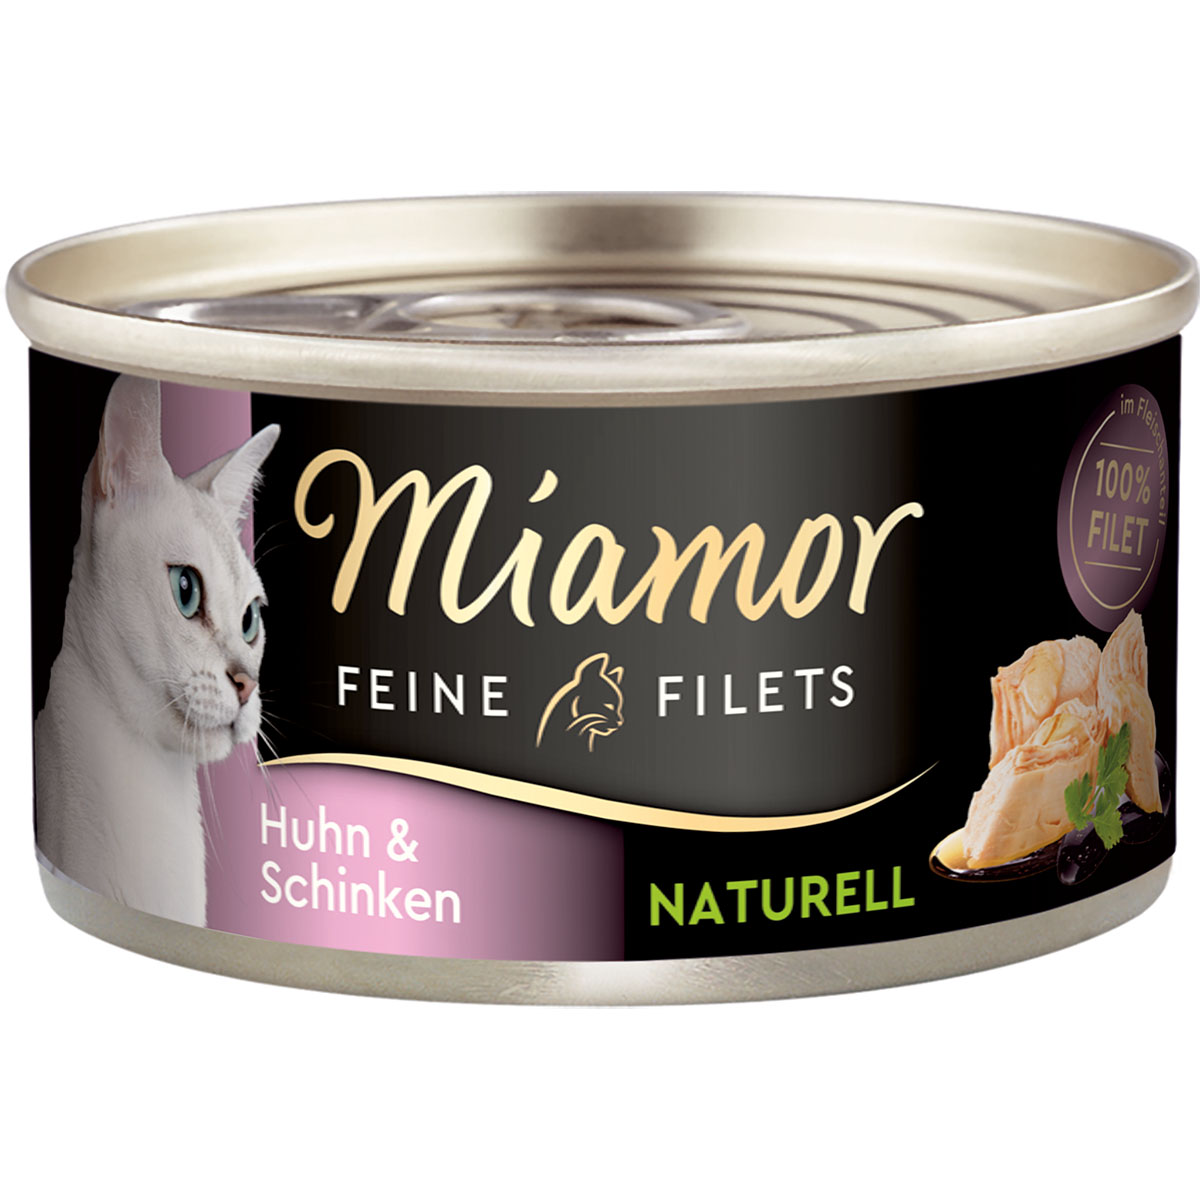 Miamor Feine Filets Naturelle, kuřecí maso a šunka, 80g plechovka